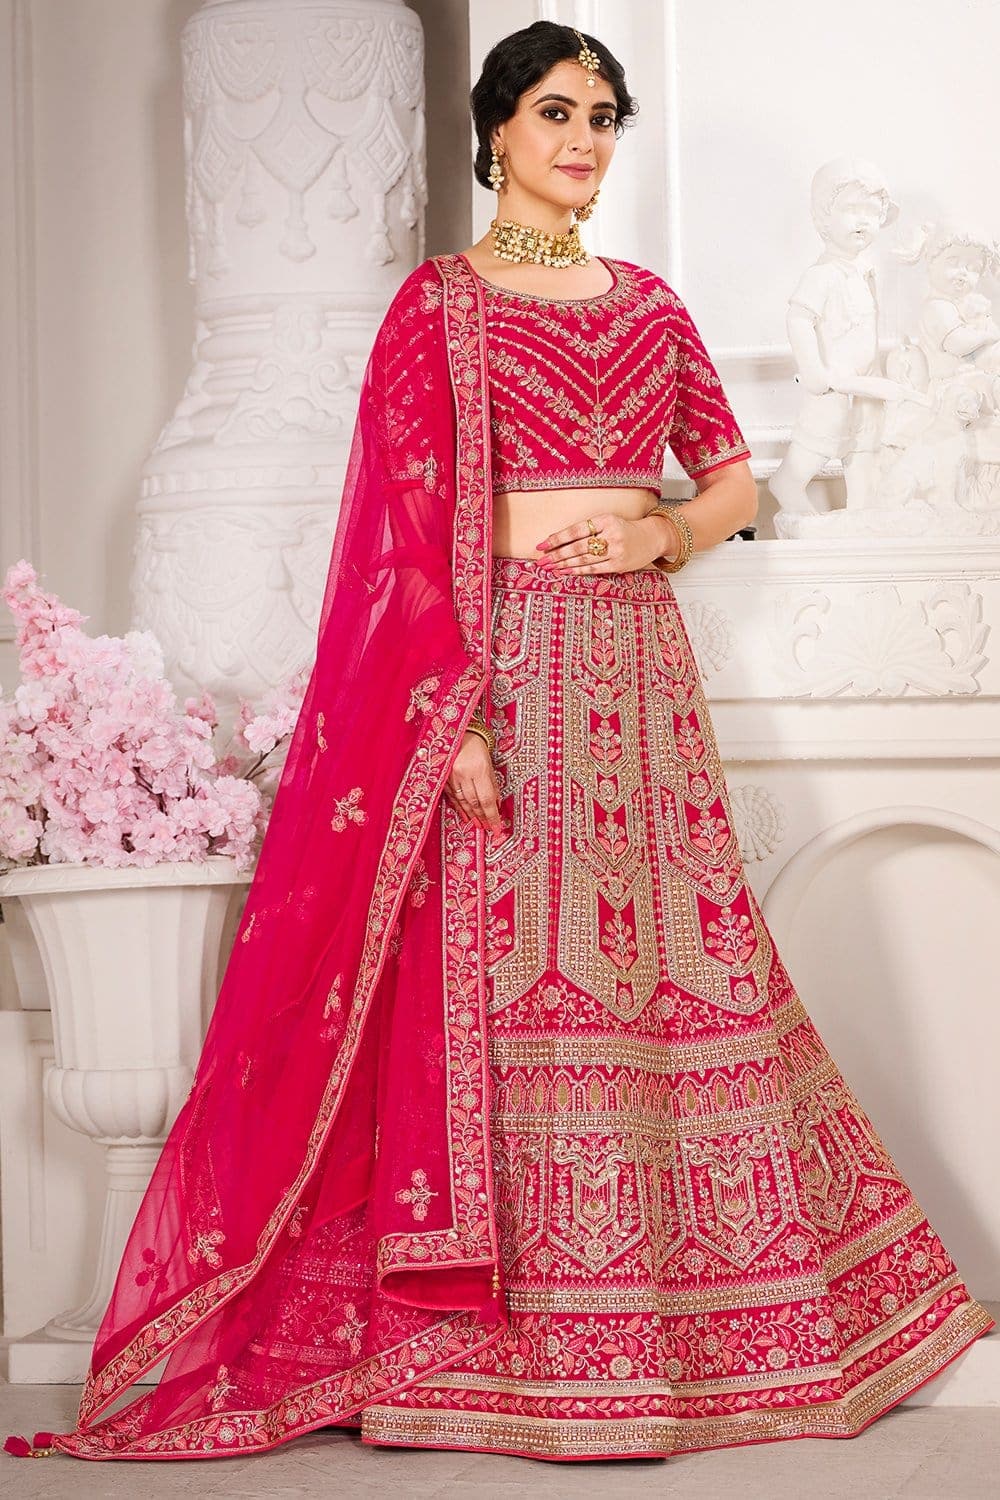 Buy Designer Bridal Hot Pink Amari Lehenga Online From Anita Dongre